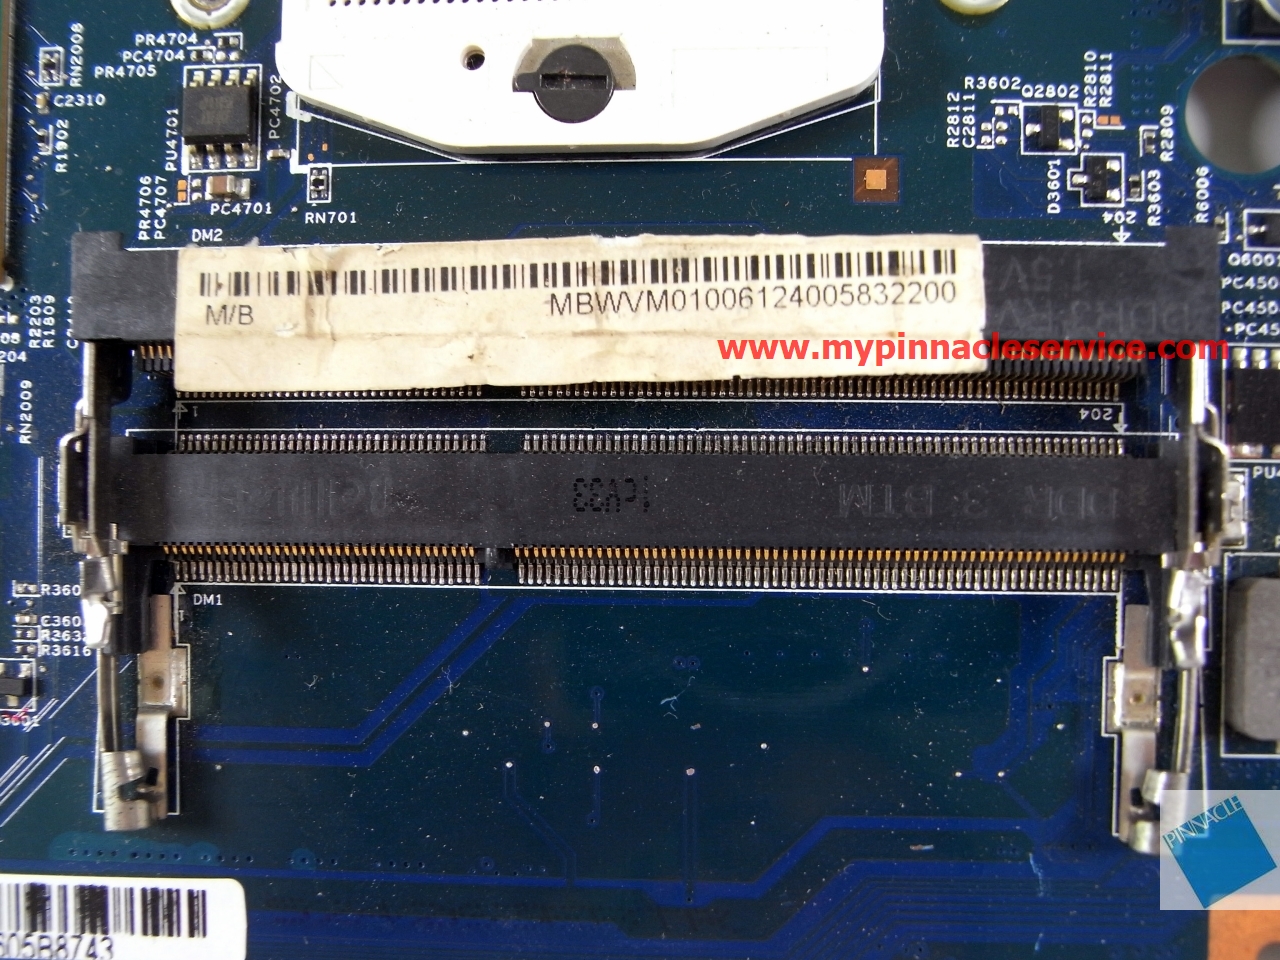 mbwvm01006-motherboard-for-acer-aspire-4750-4752g-4755g-je40-48.4iq01.041-r0010287.jpg